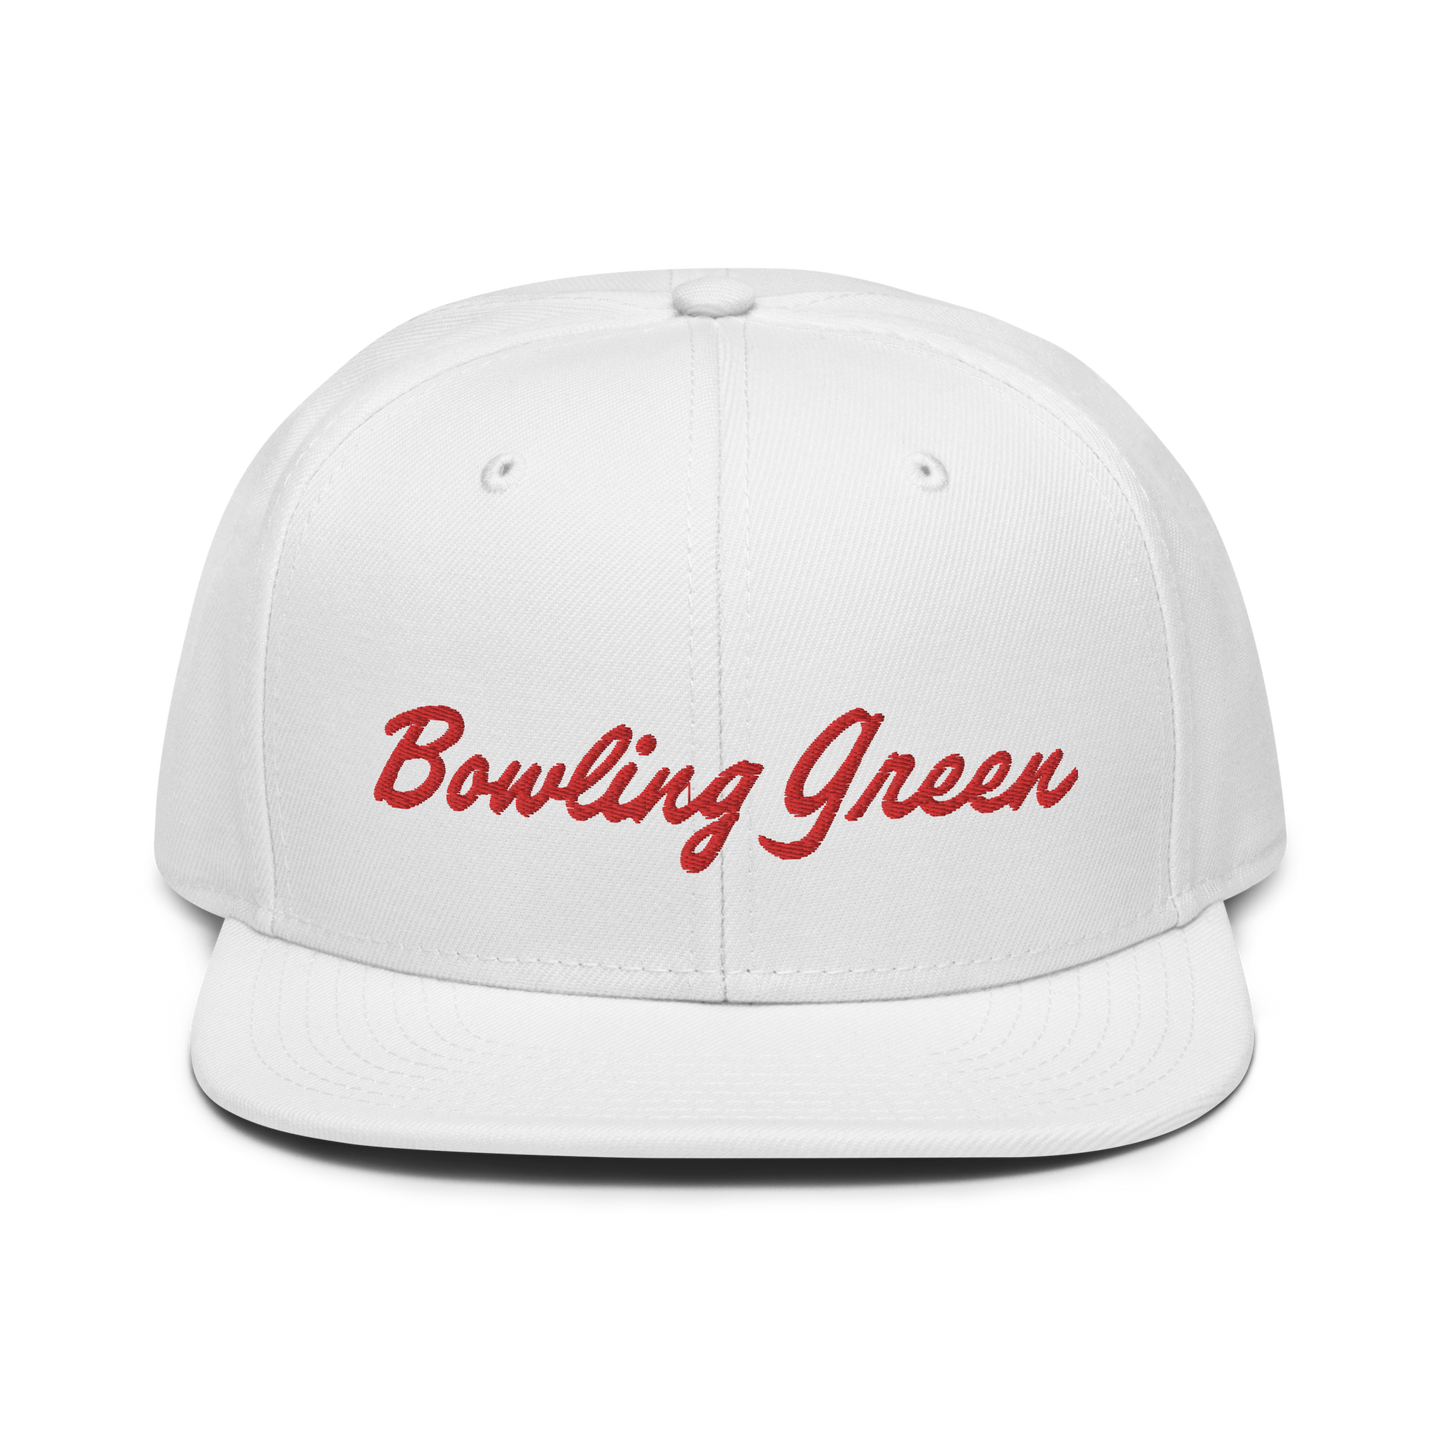 Bowling Green - Snapback